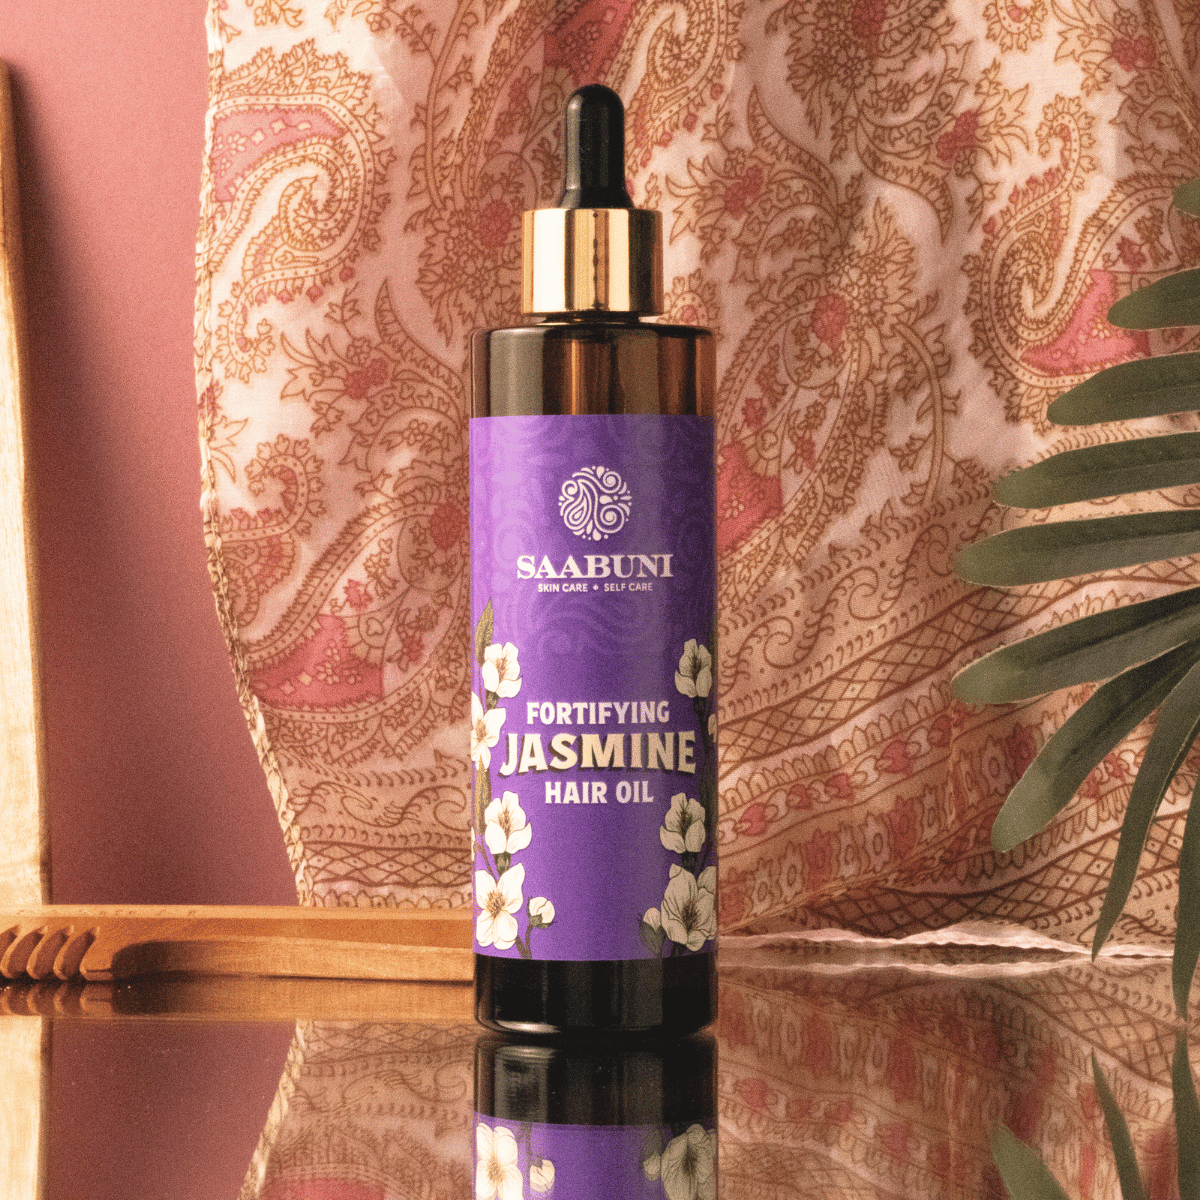 Jasmine Hair oil with paisley background